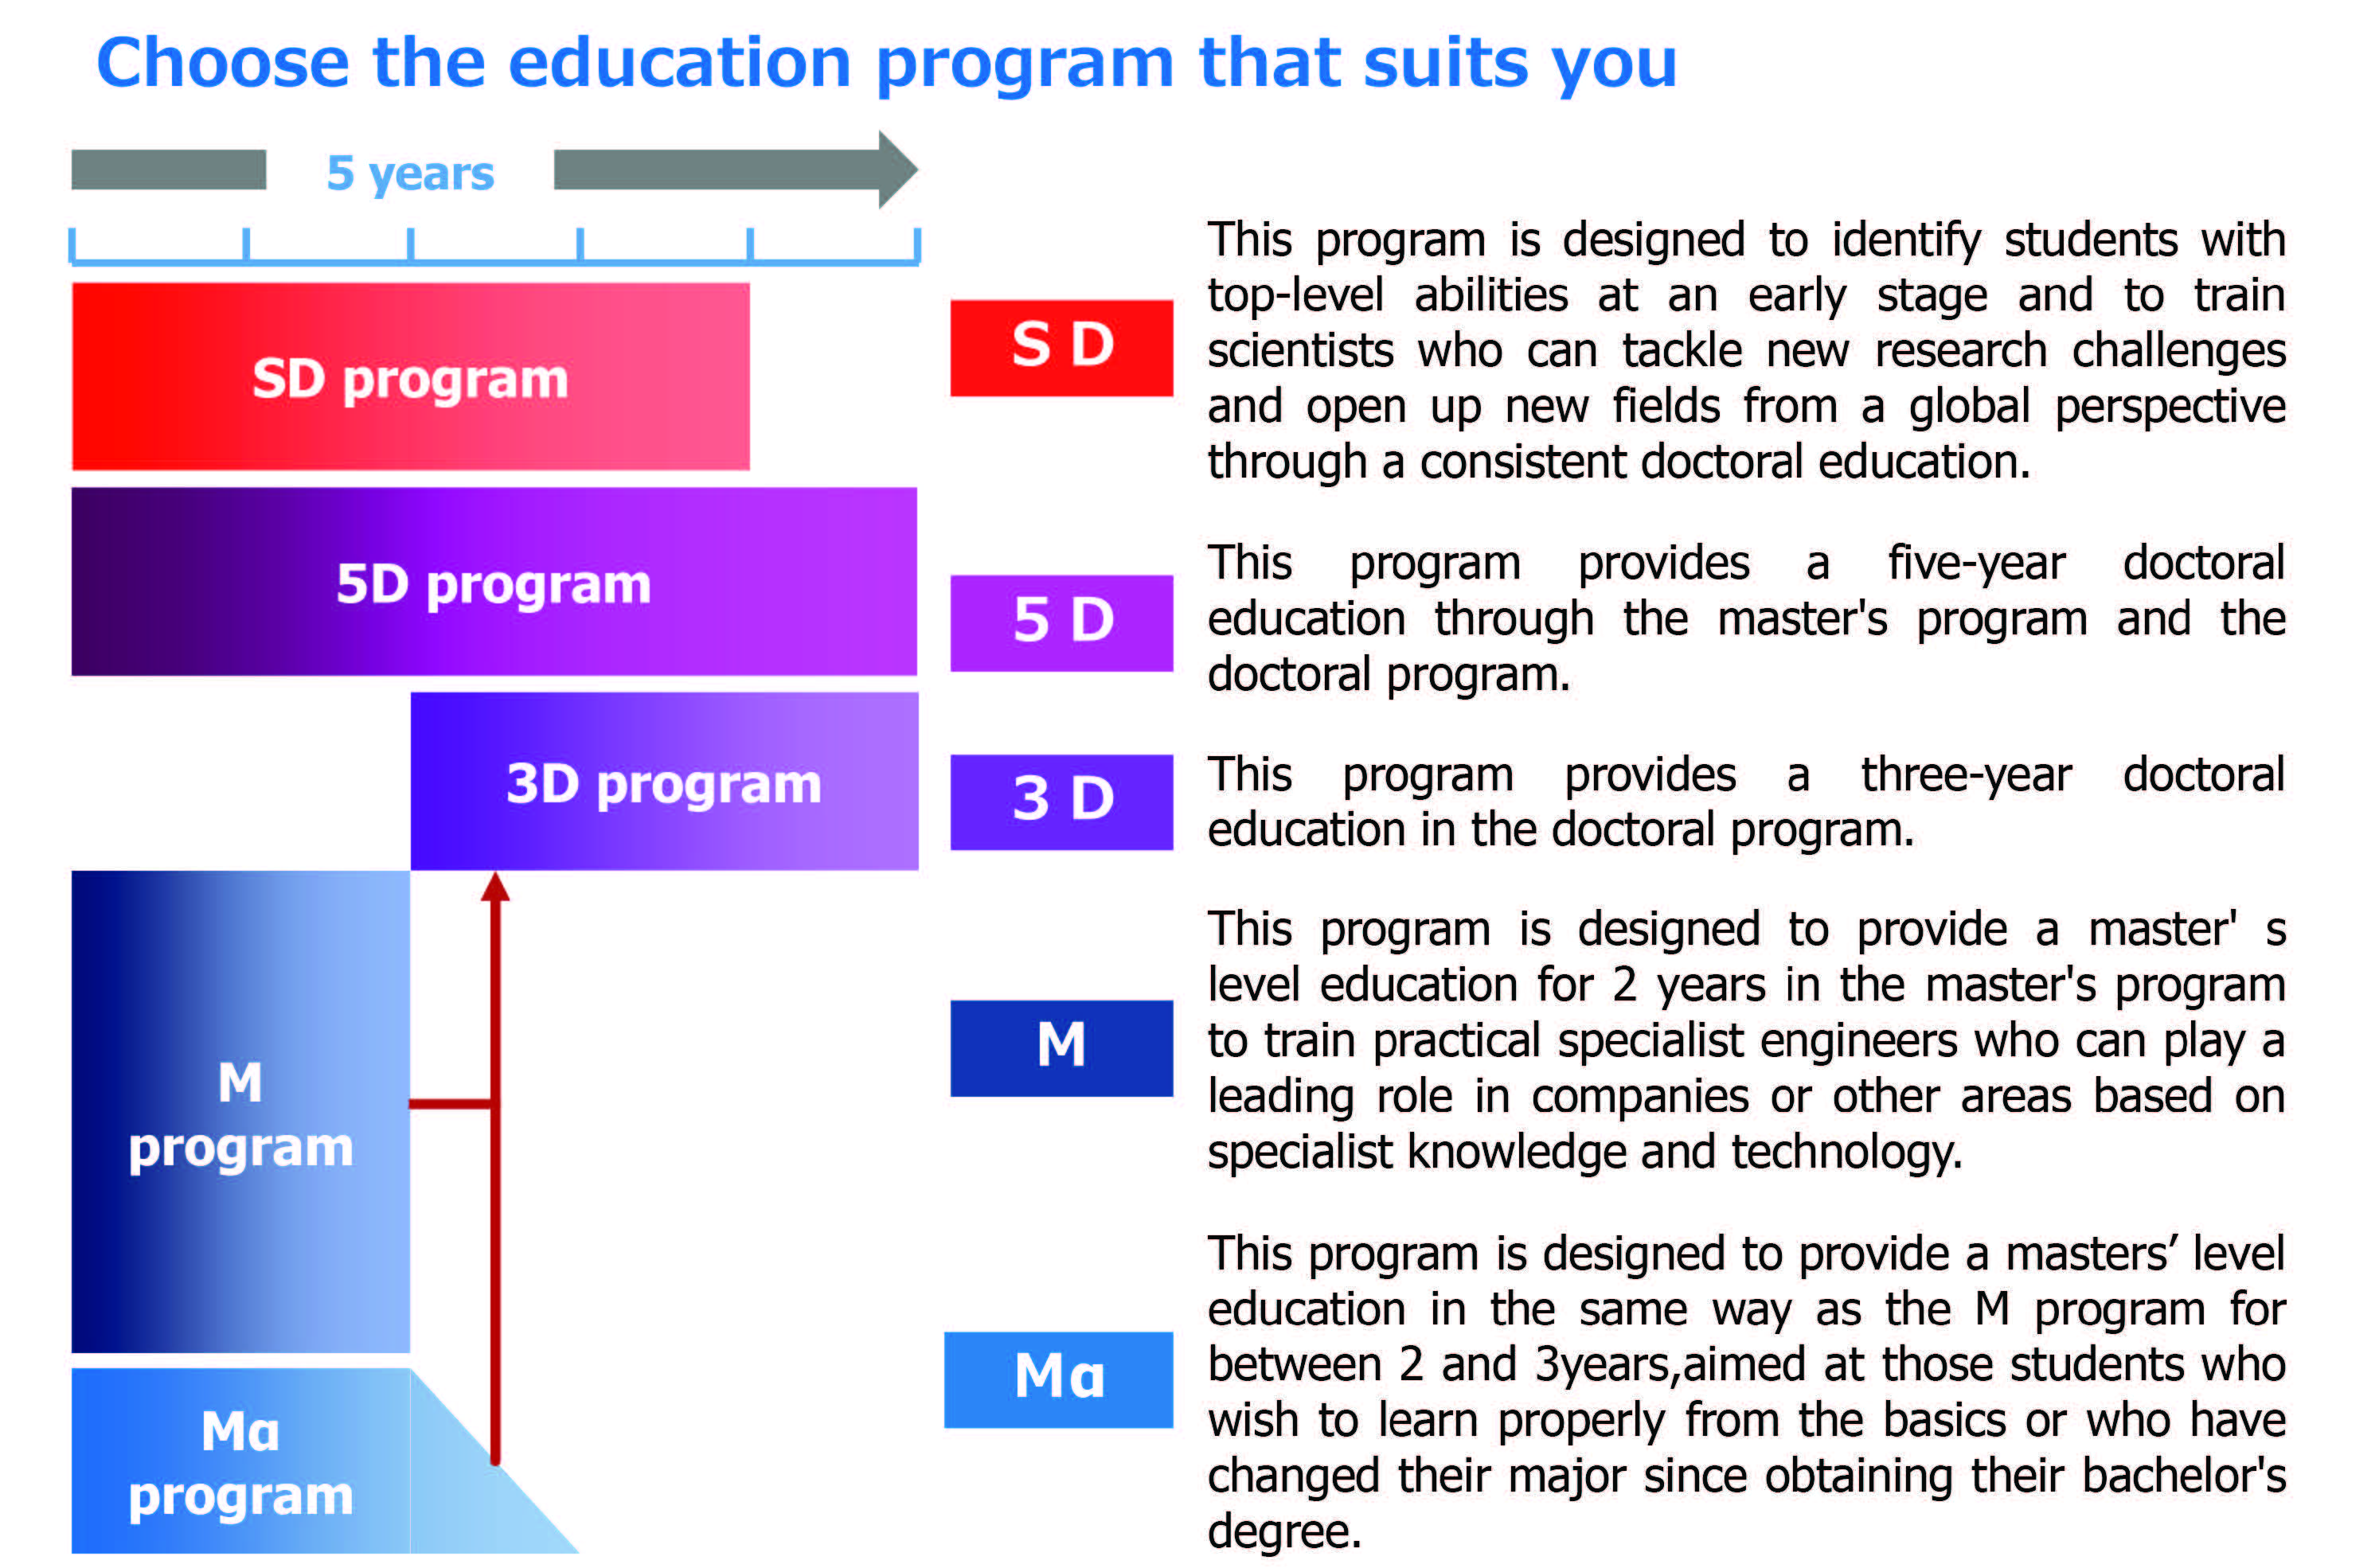 EducationProgram